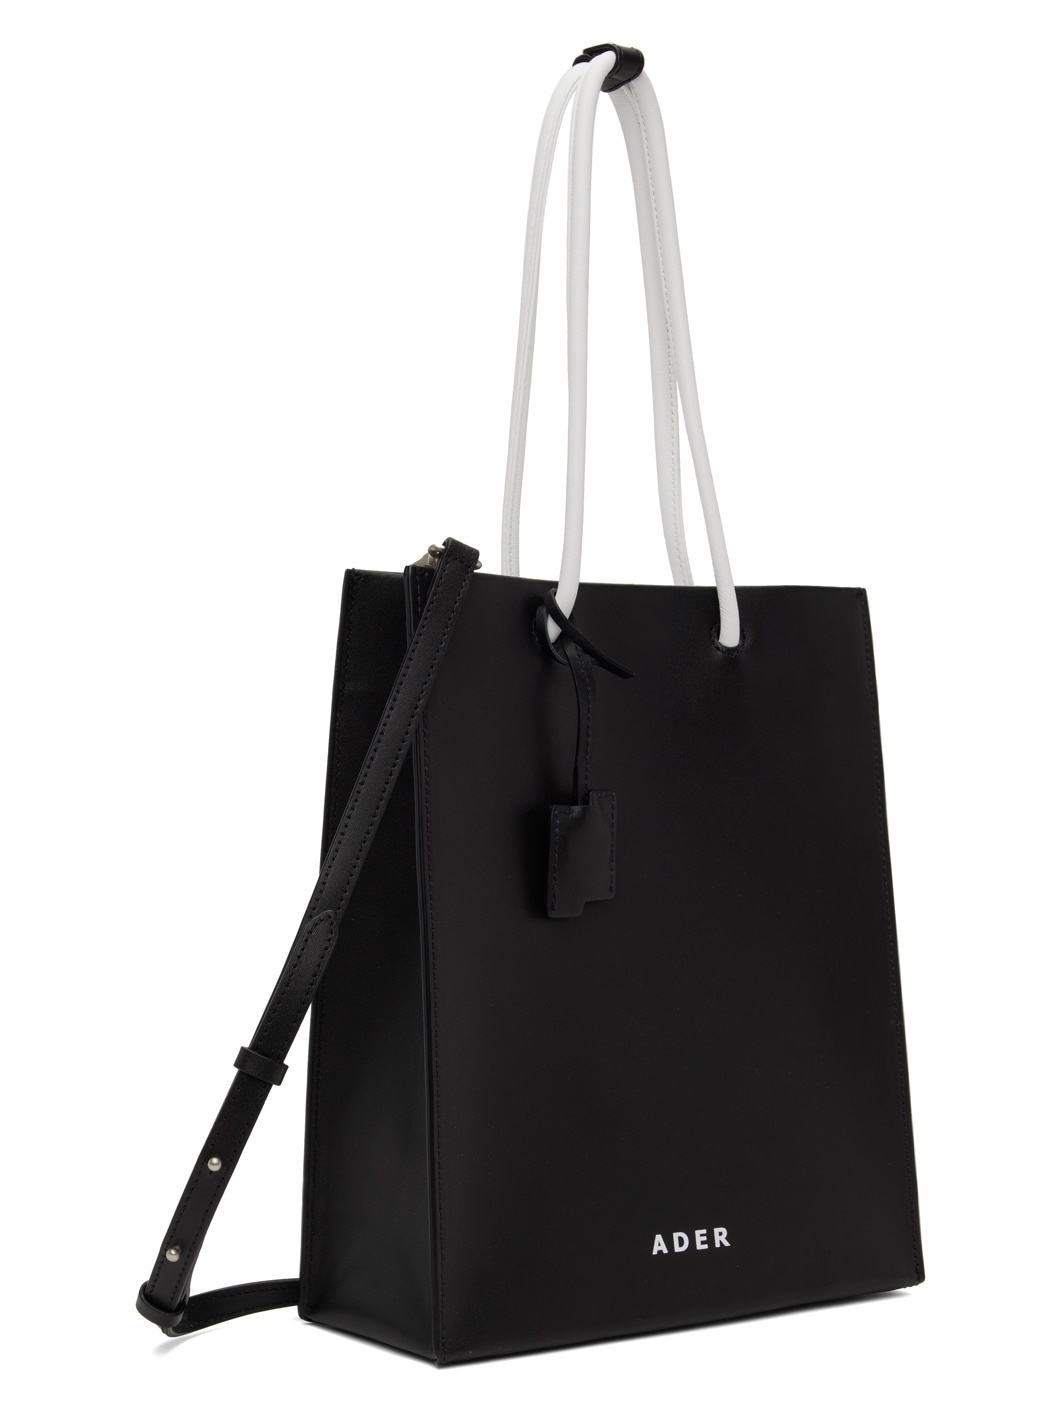 Black Shopping Bag - 2